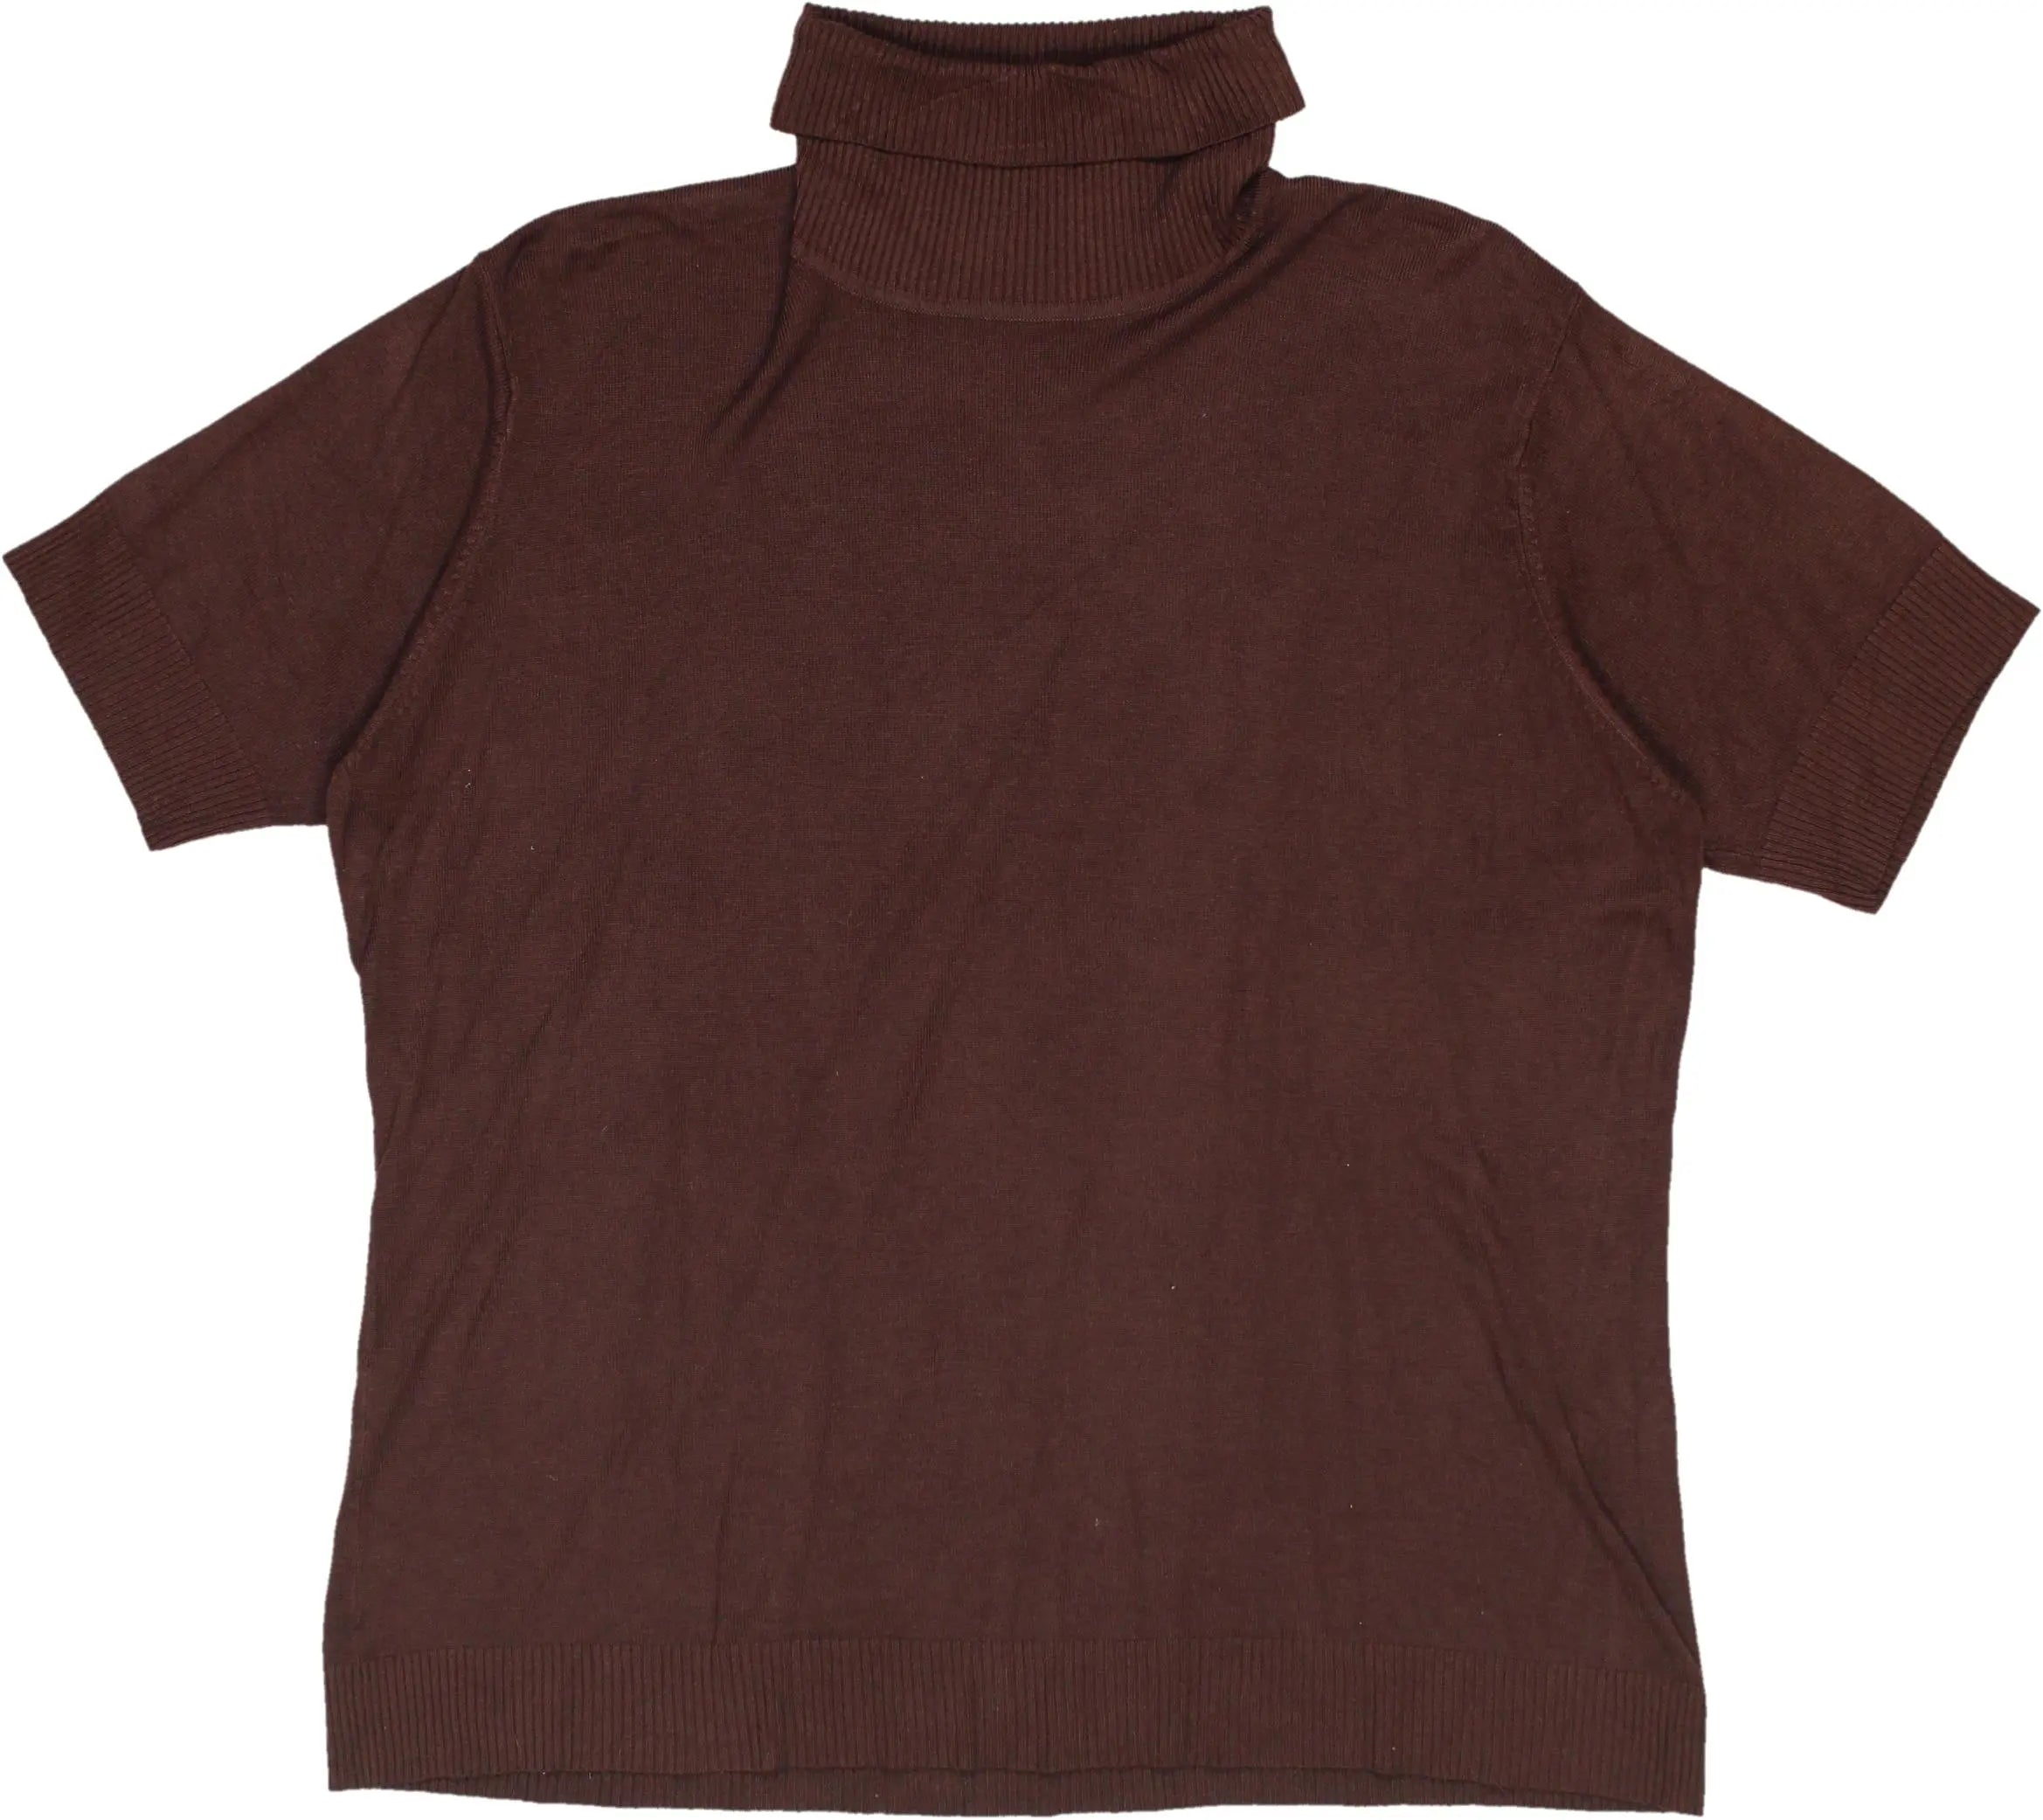 MS Mode - Brown Short Sleeve Turtleneck Jumper- ThriftTale.com - Vintage and second handclothing